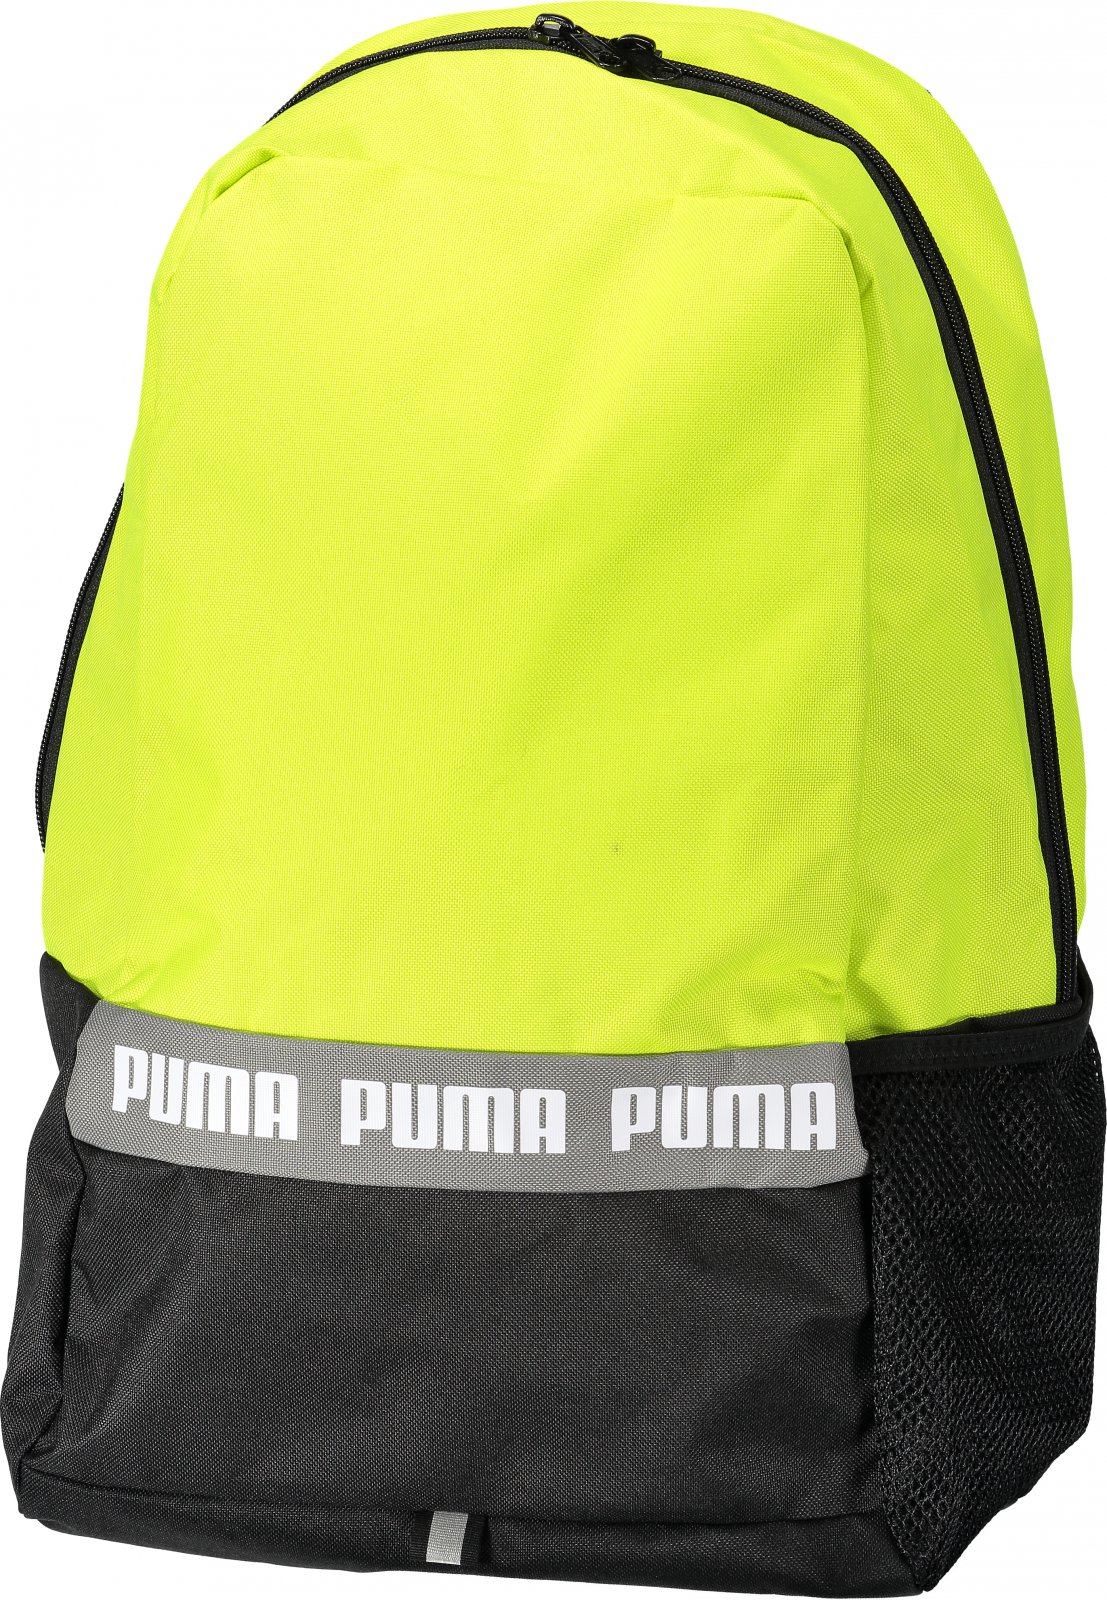 puma acid lime backpack